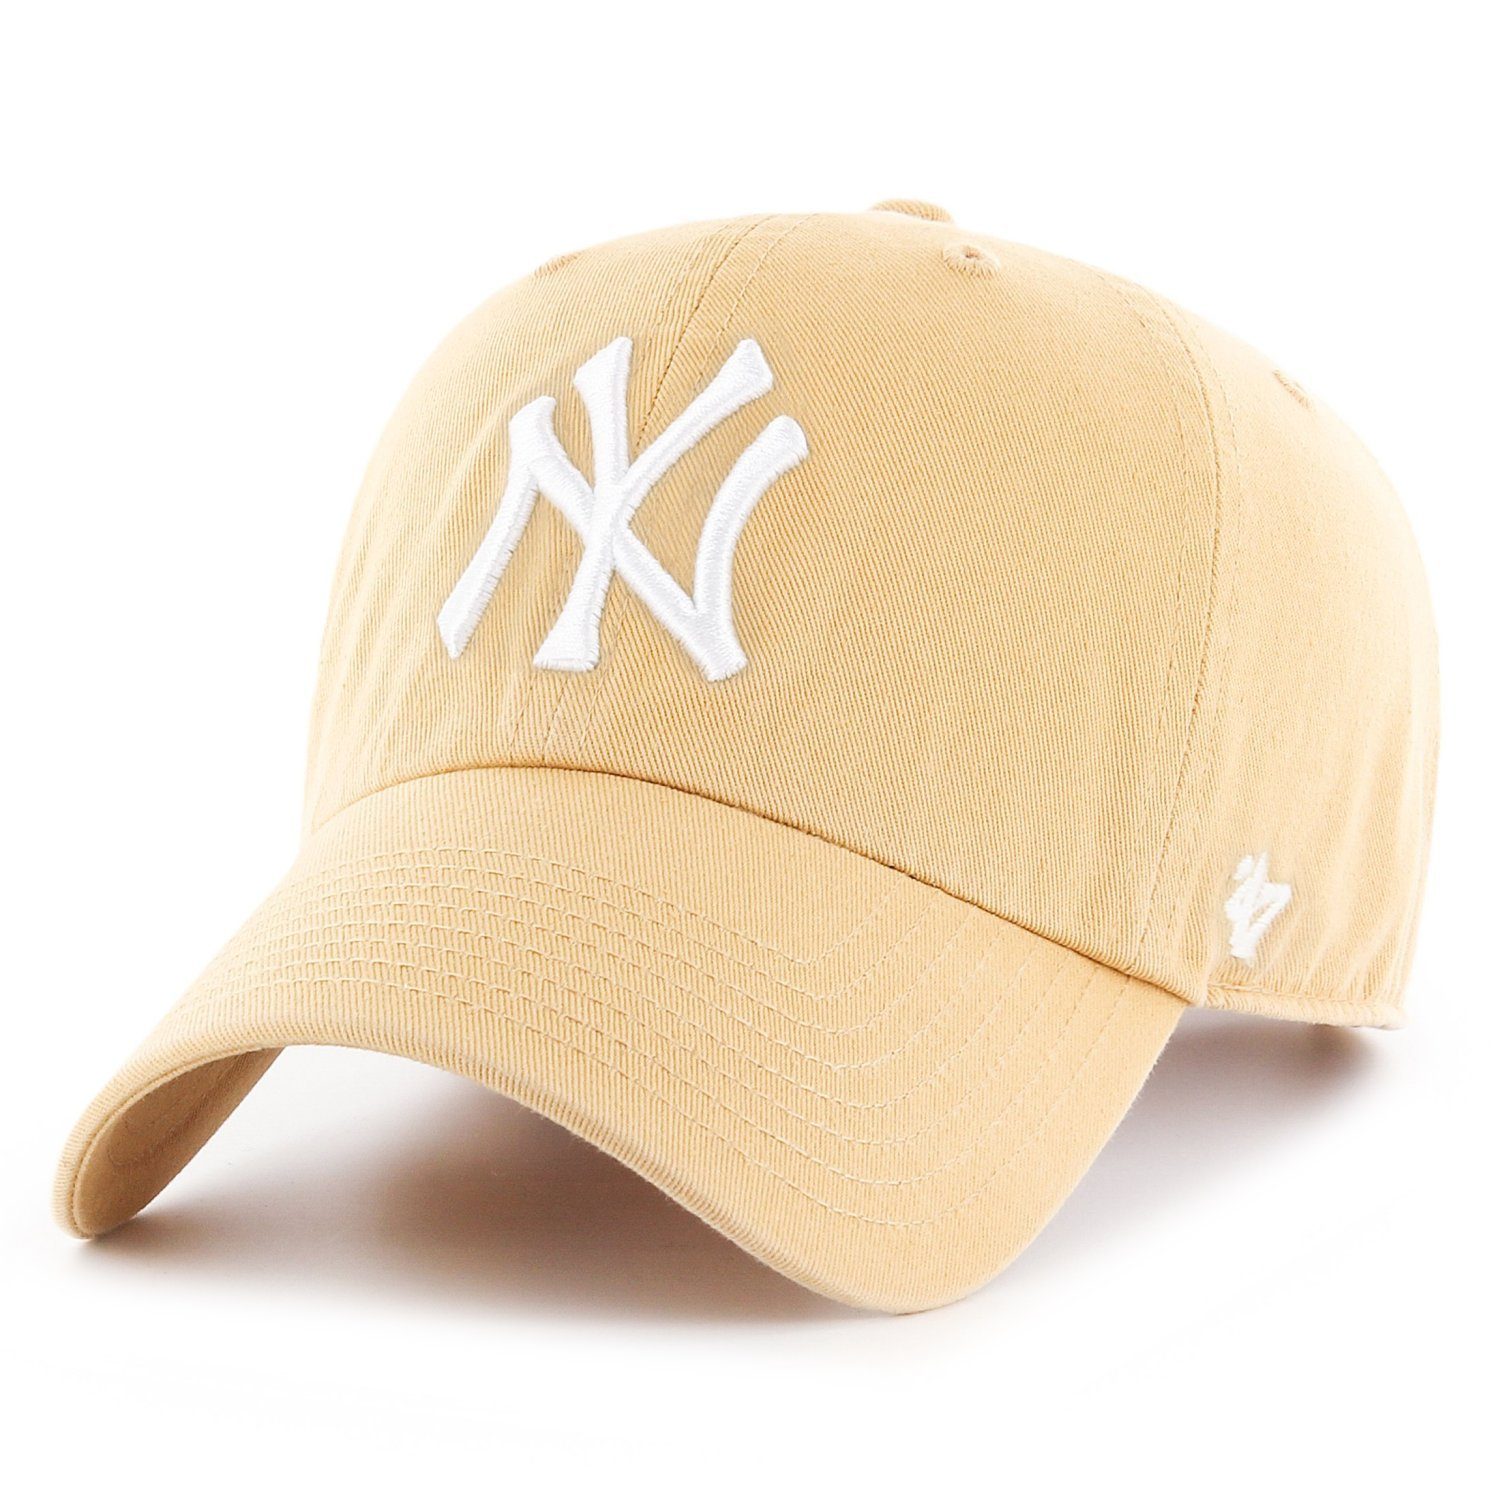 '47 Brand Trucker Cap Relaxed Fit MLB New York Yankees